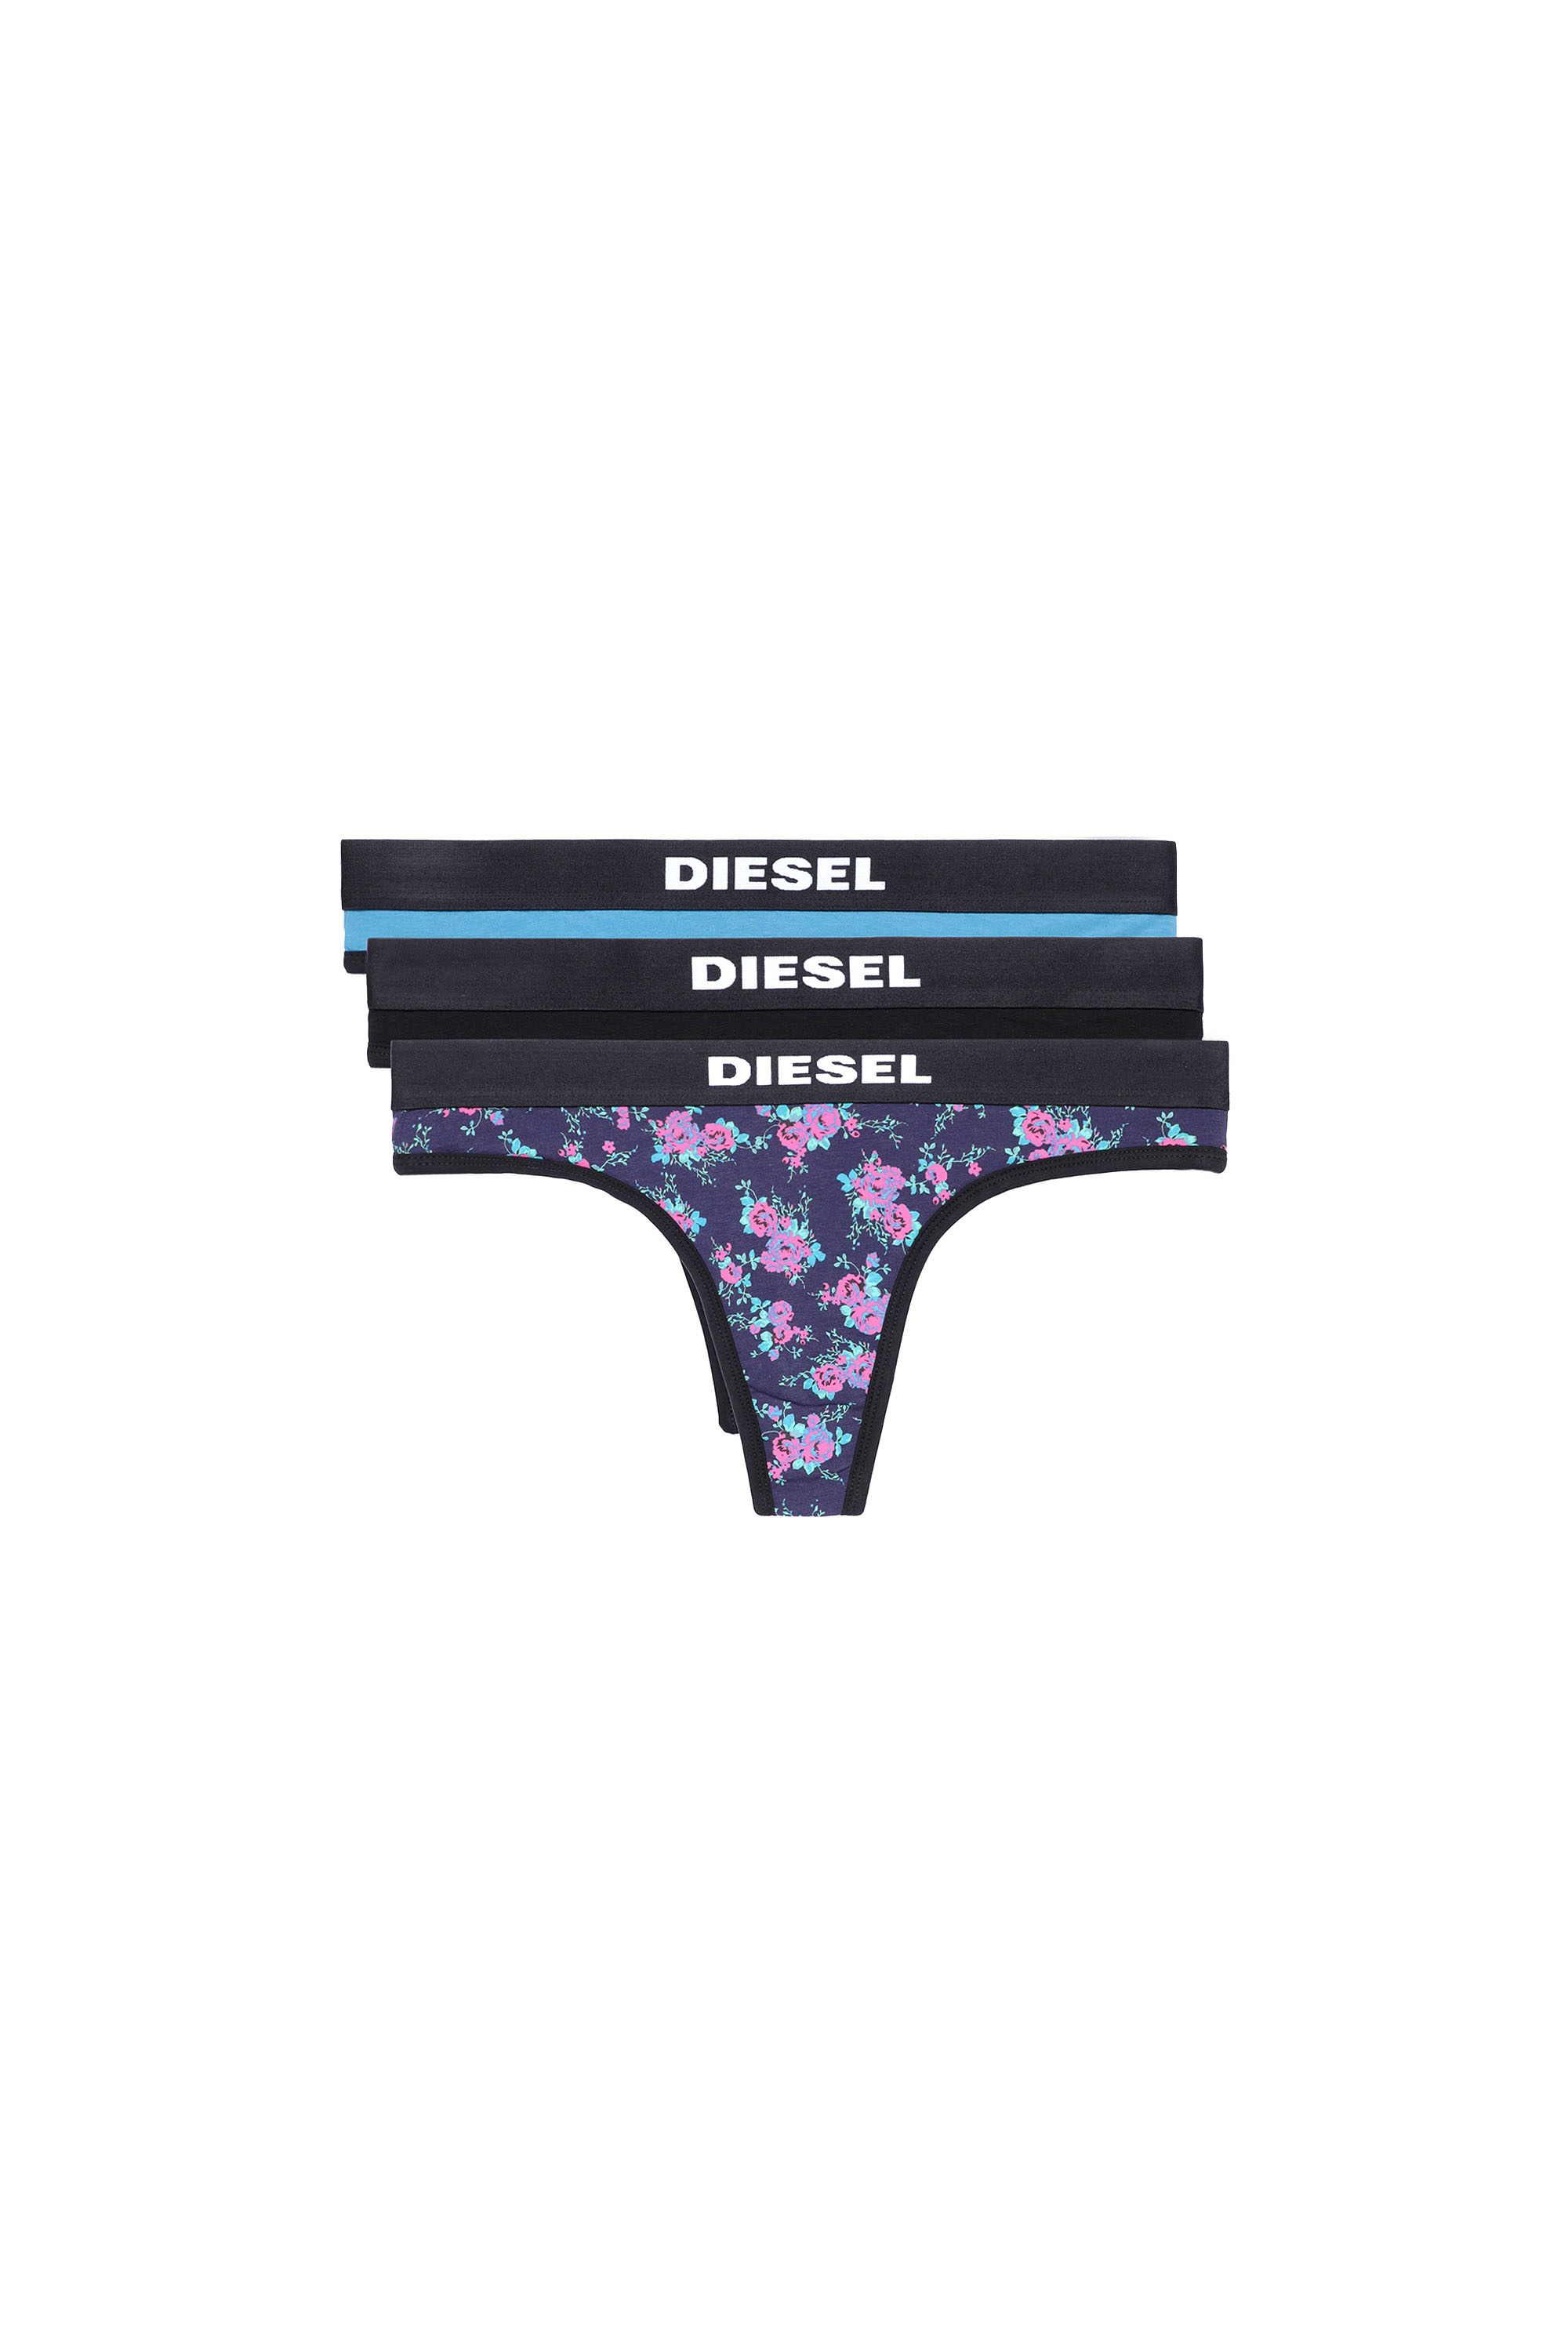 Diesel - UFST-STARS-THREEPACK, Black/Blue - Image 3